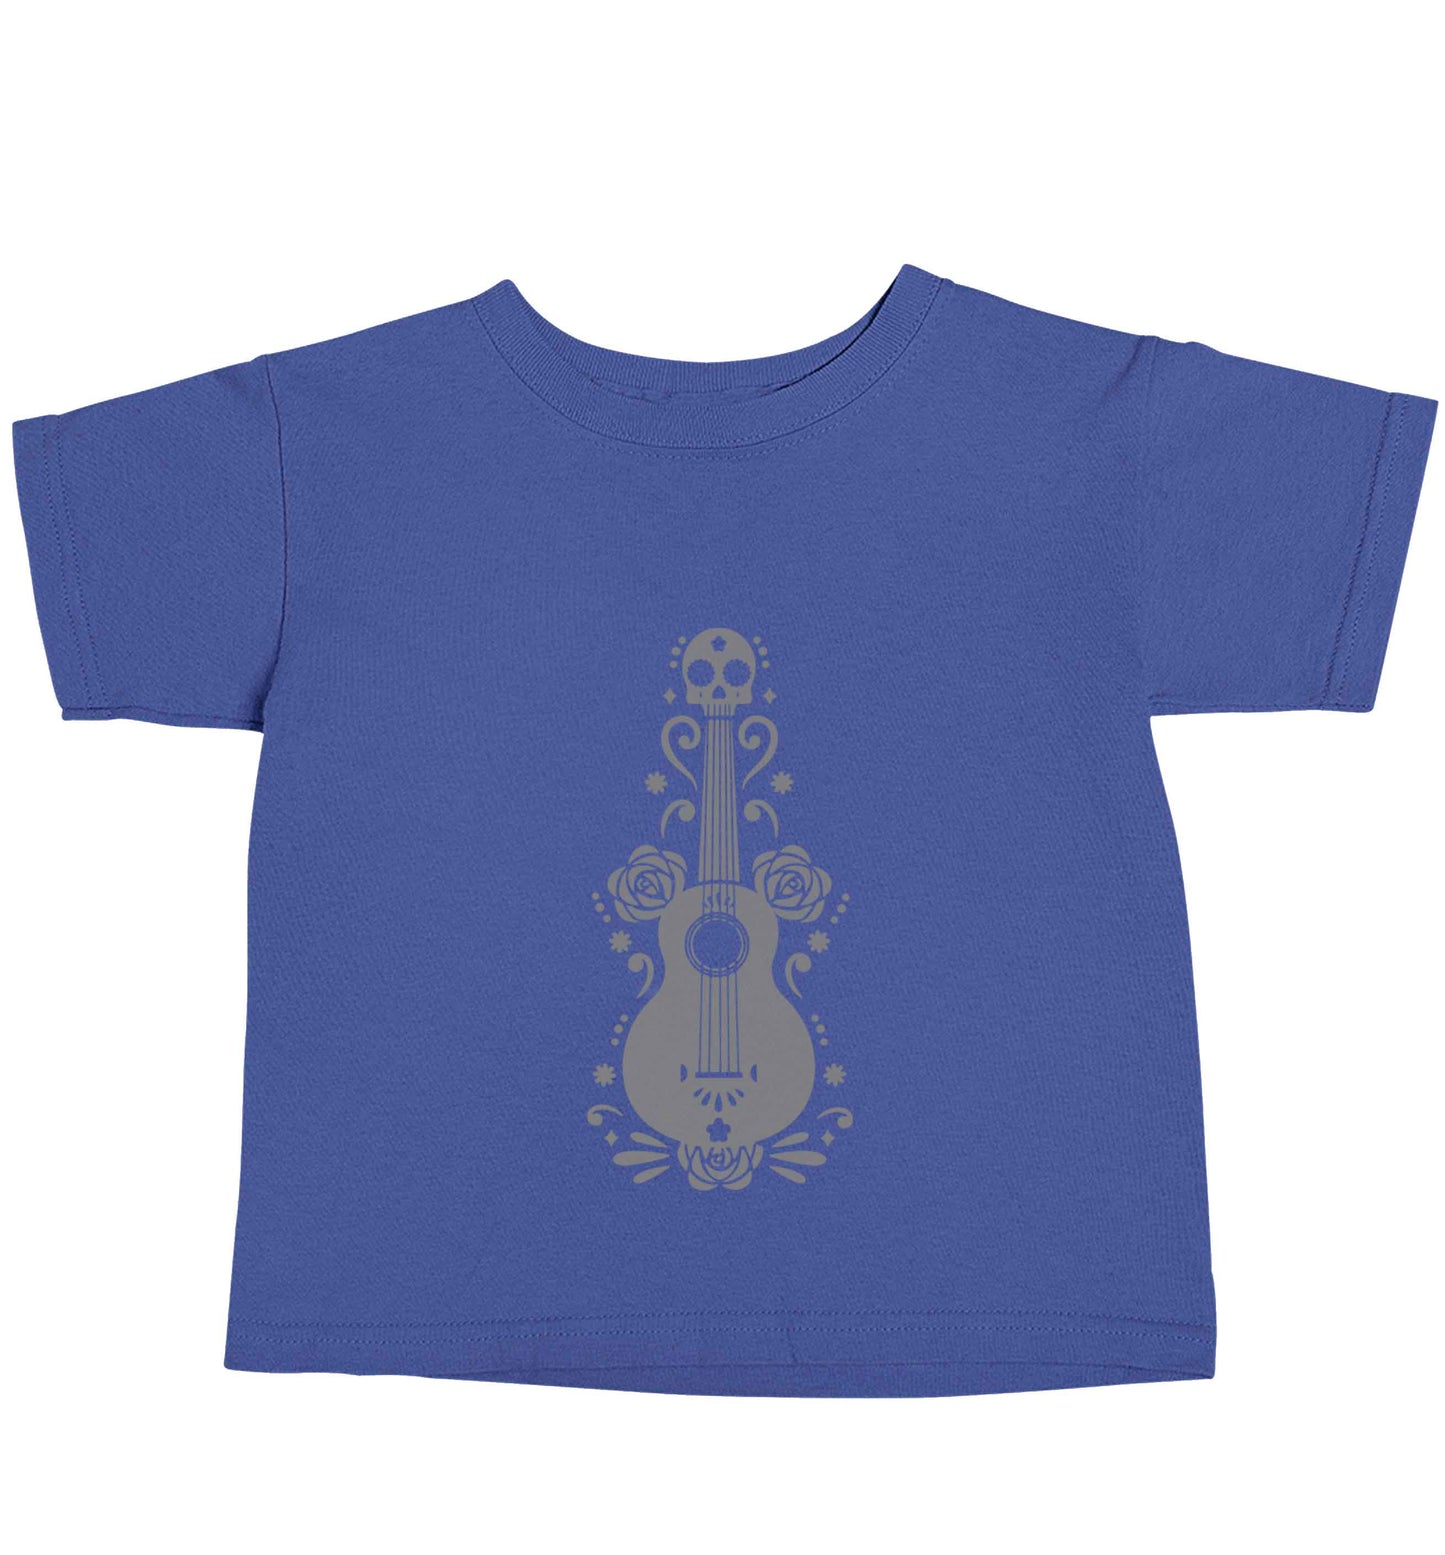 Guitar skull illustration blue baby toddler Tshirt 2 Years